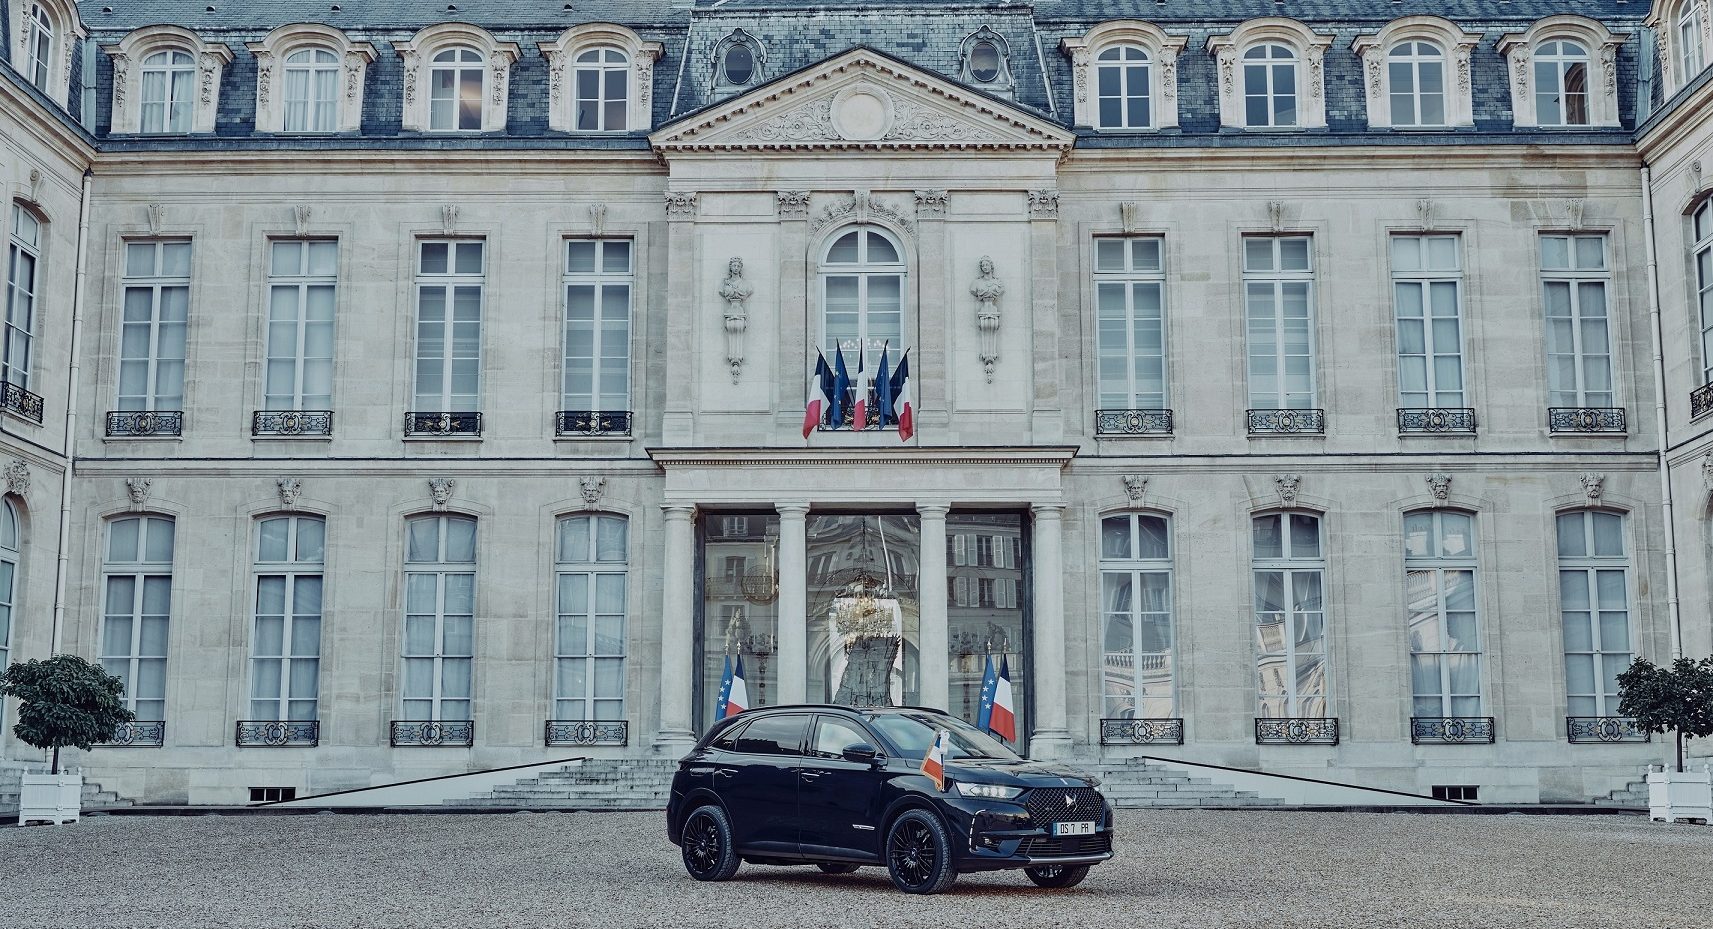 DS 7 Crossback:Το σύμβολο της savoire-faire στην υπηρεσία του Γάλλου Προέδρου, Emmanuel Macron! Ο Γάλλος Πρόεδρος, Emmanuel Macron, για τις μετακινήσεις του επιλέγει για ακόμα μια φορά ένα μοντέλο της DS Automobiles και δείχνει την απόλυτη εμπιστοσύνη στα μοντέλα της Premium Γαλλικής μάρκας.